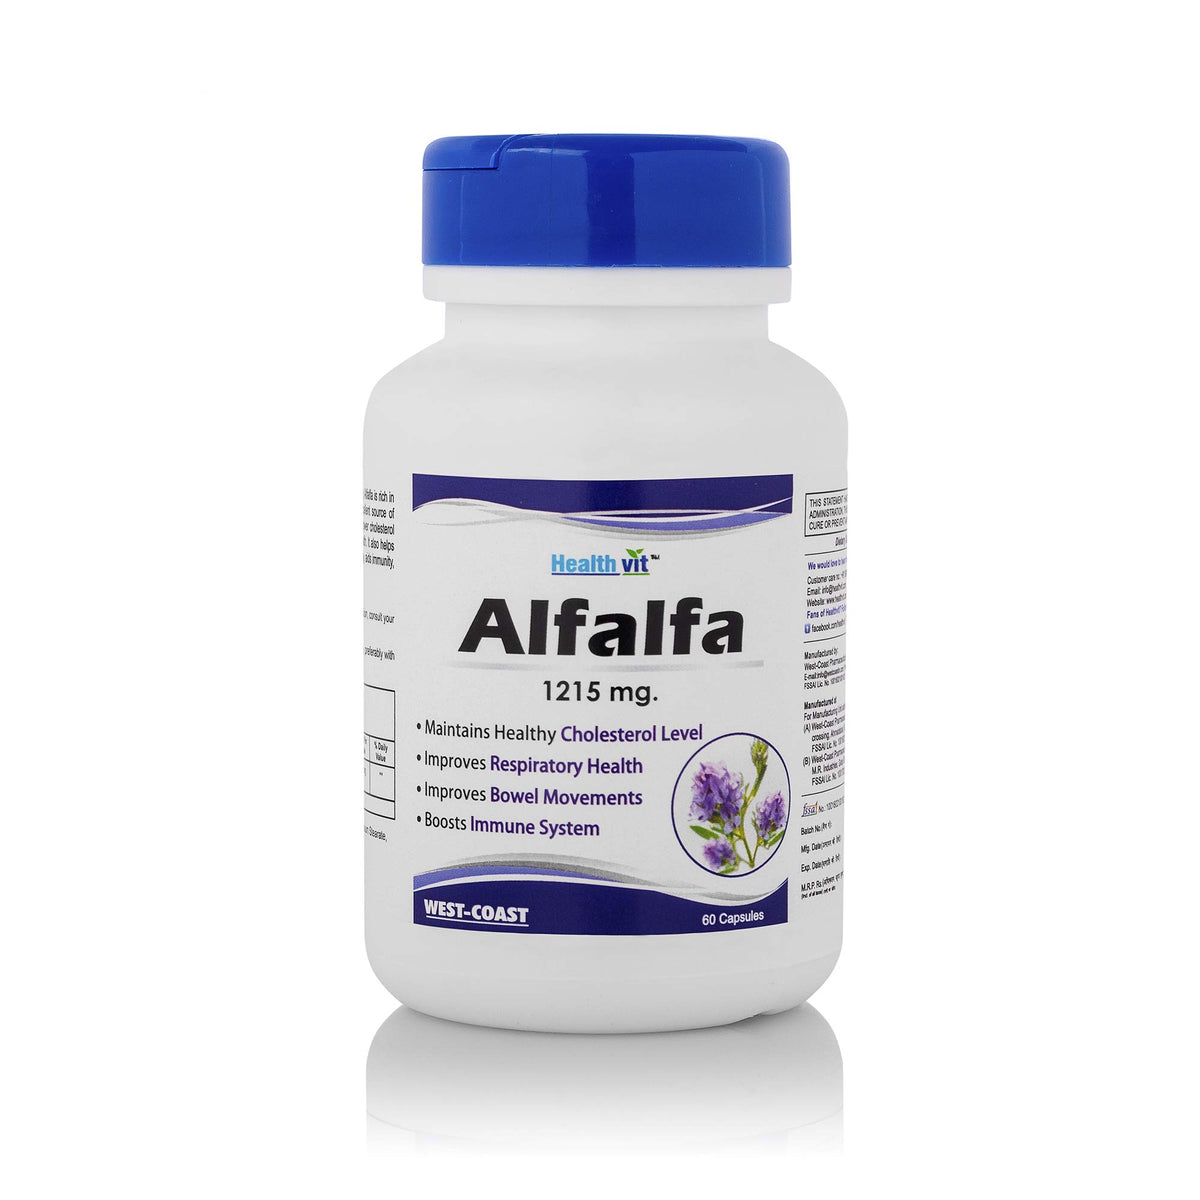 Healthvit Alfalfa 1215 mg, 60 Capsules